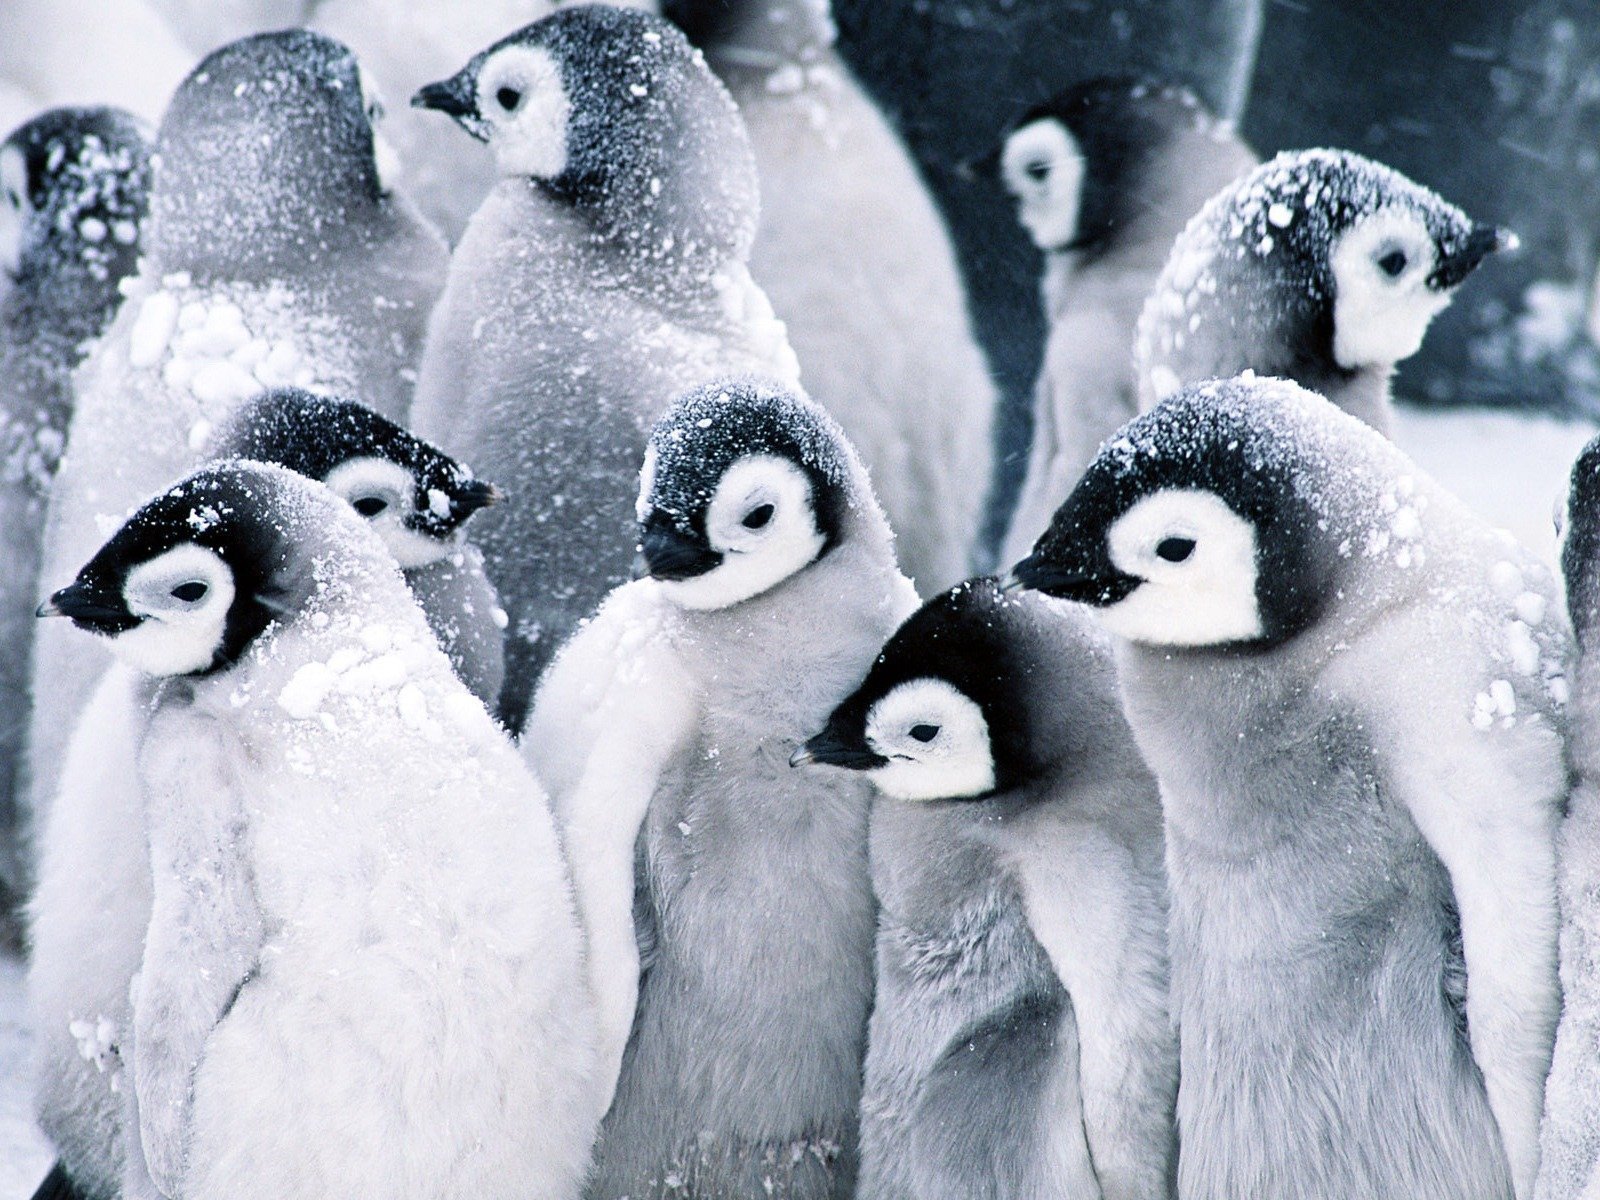 Mláďata tučňáků císařských